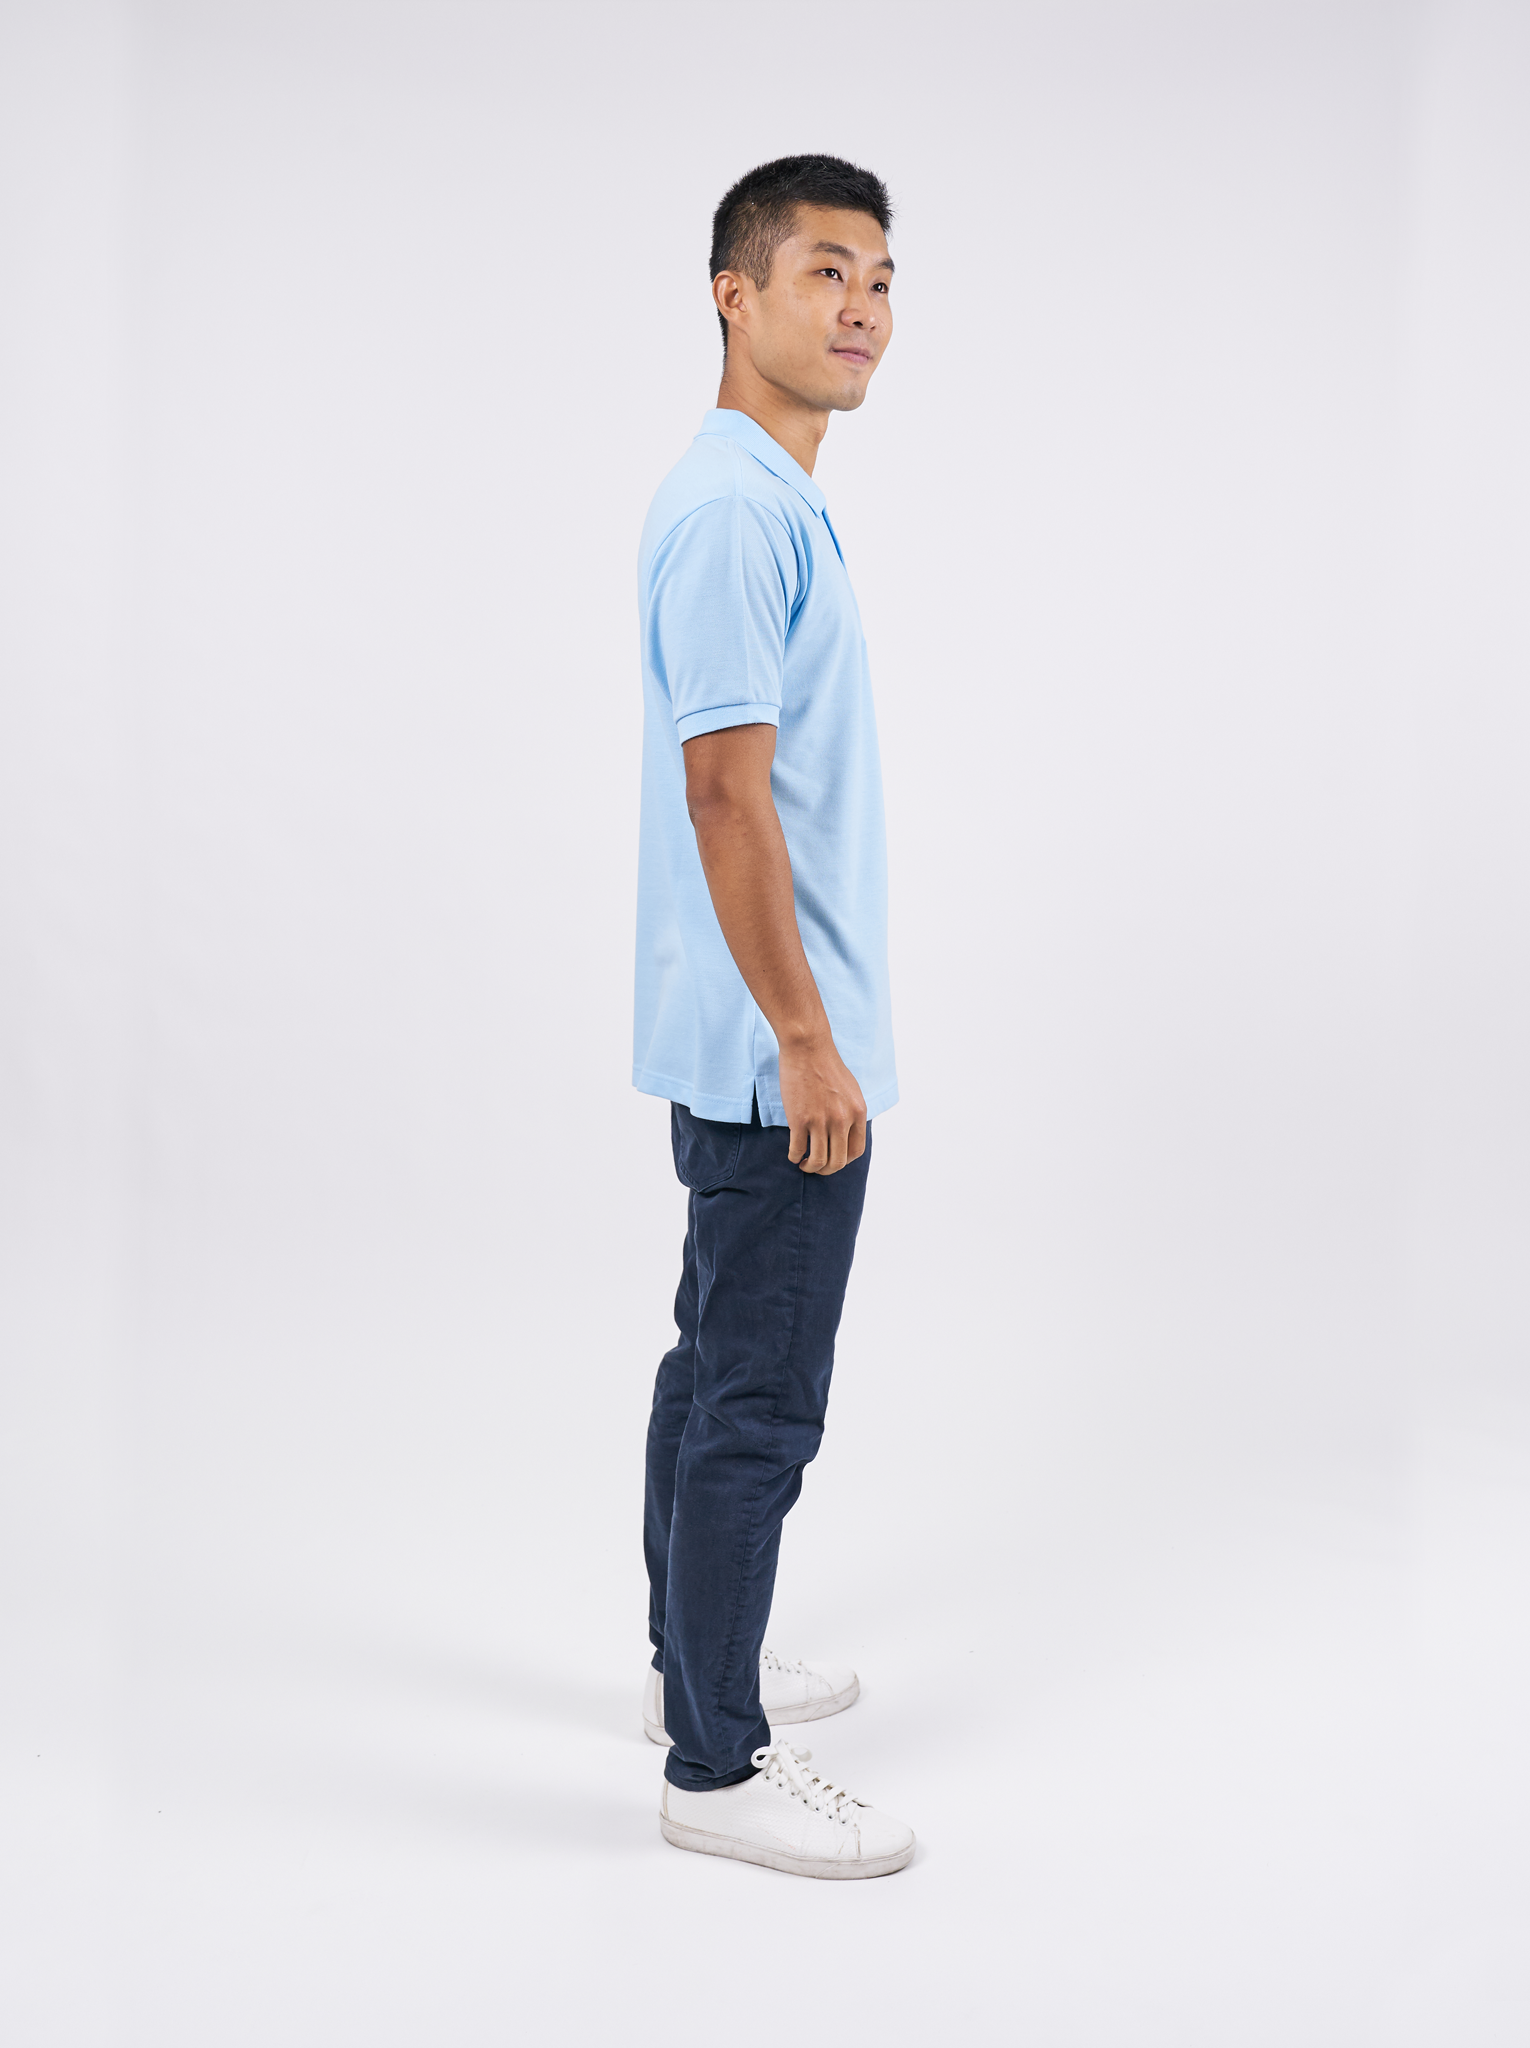 Polo Shirt เสื้อโปโล (Light Blue, สีฟ้าอ่อน)(Unisex)